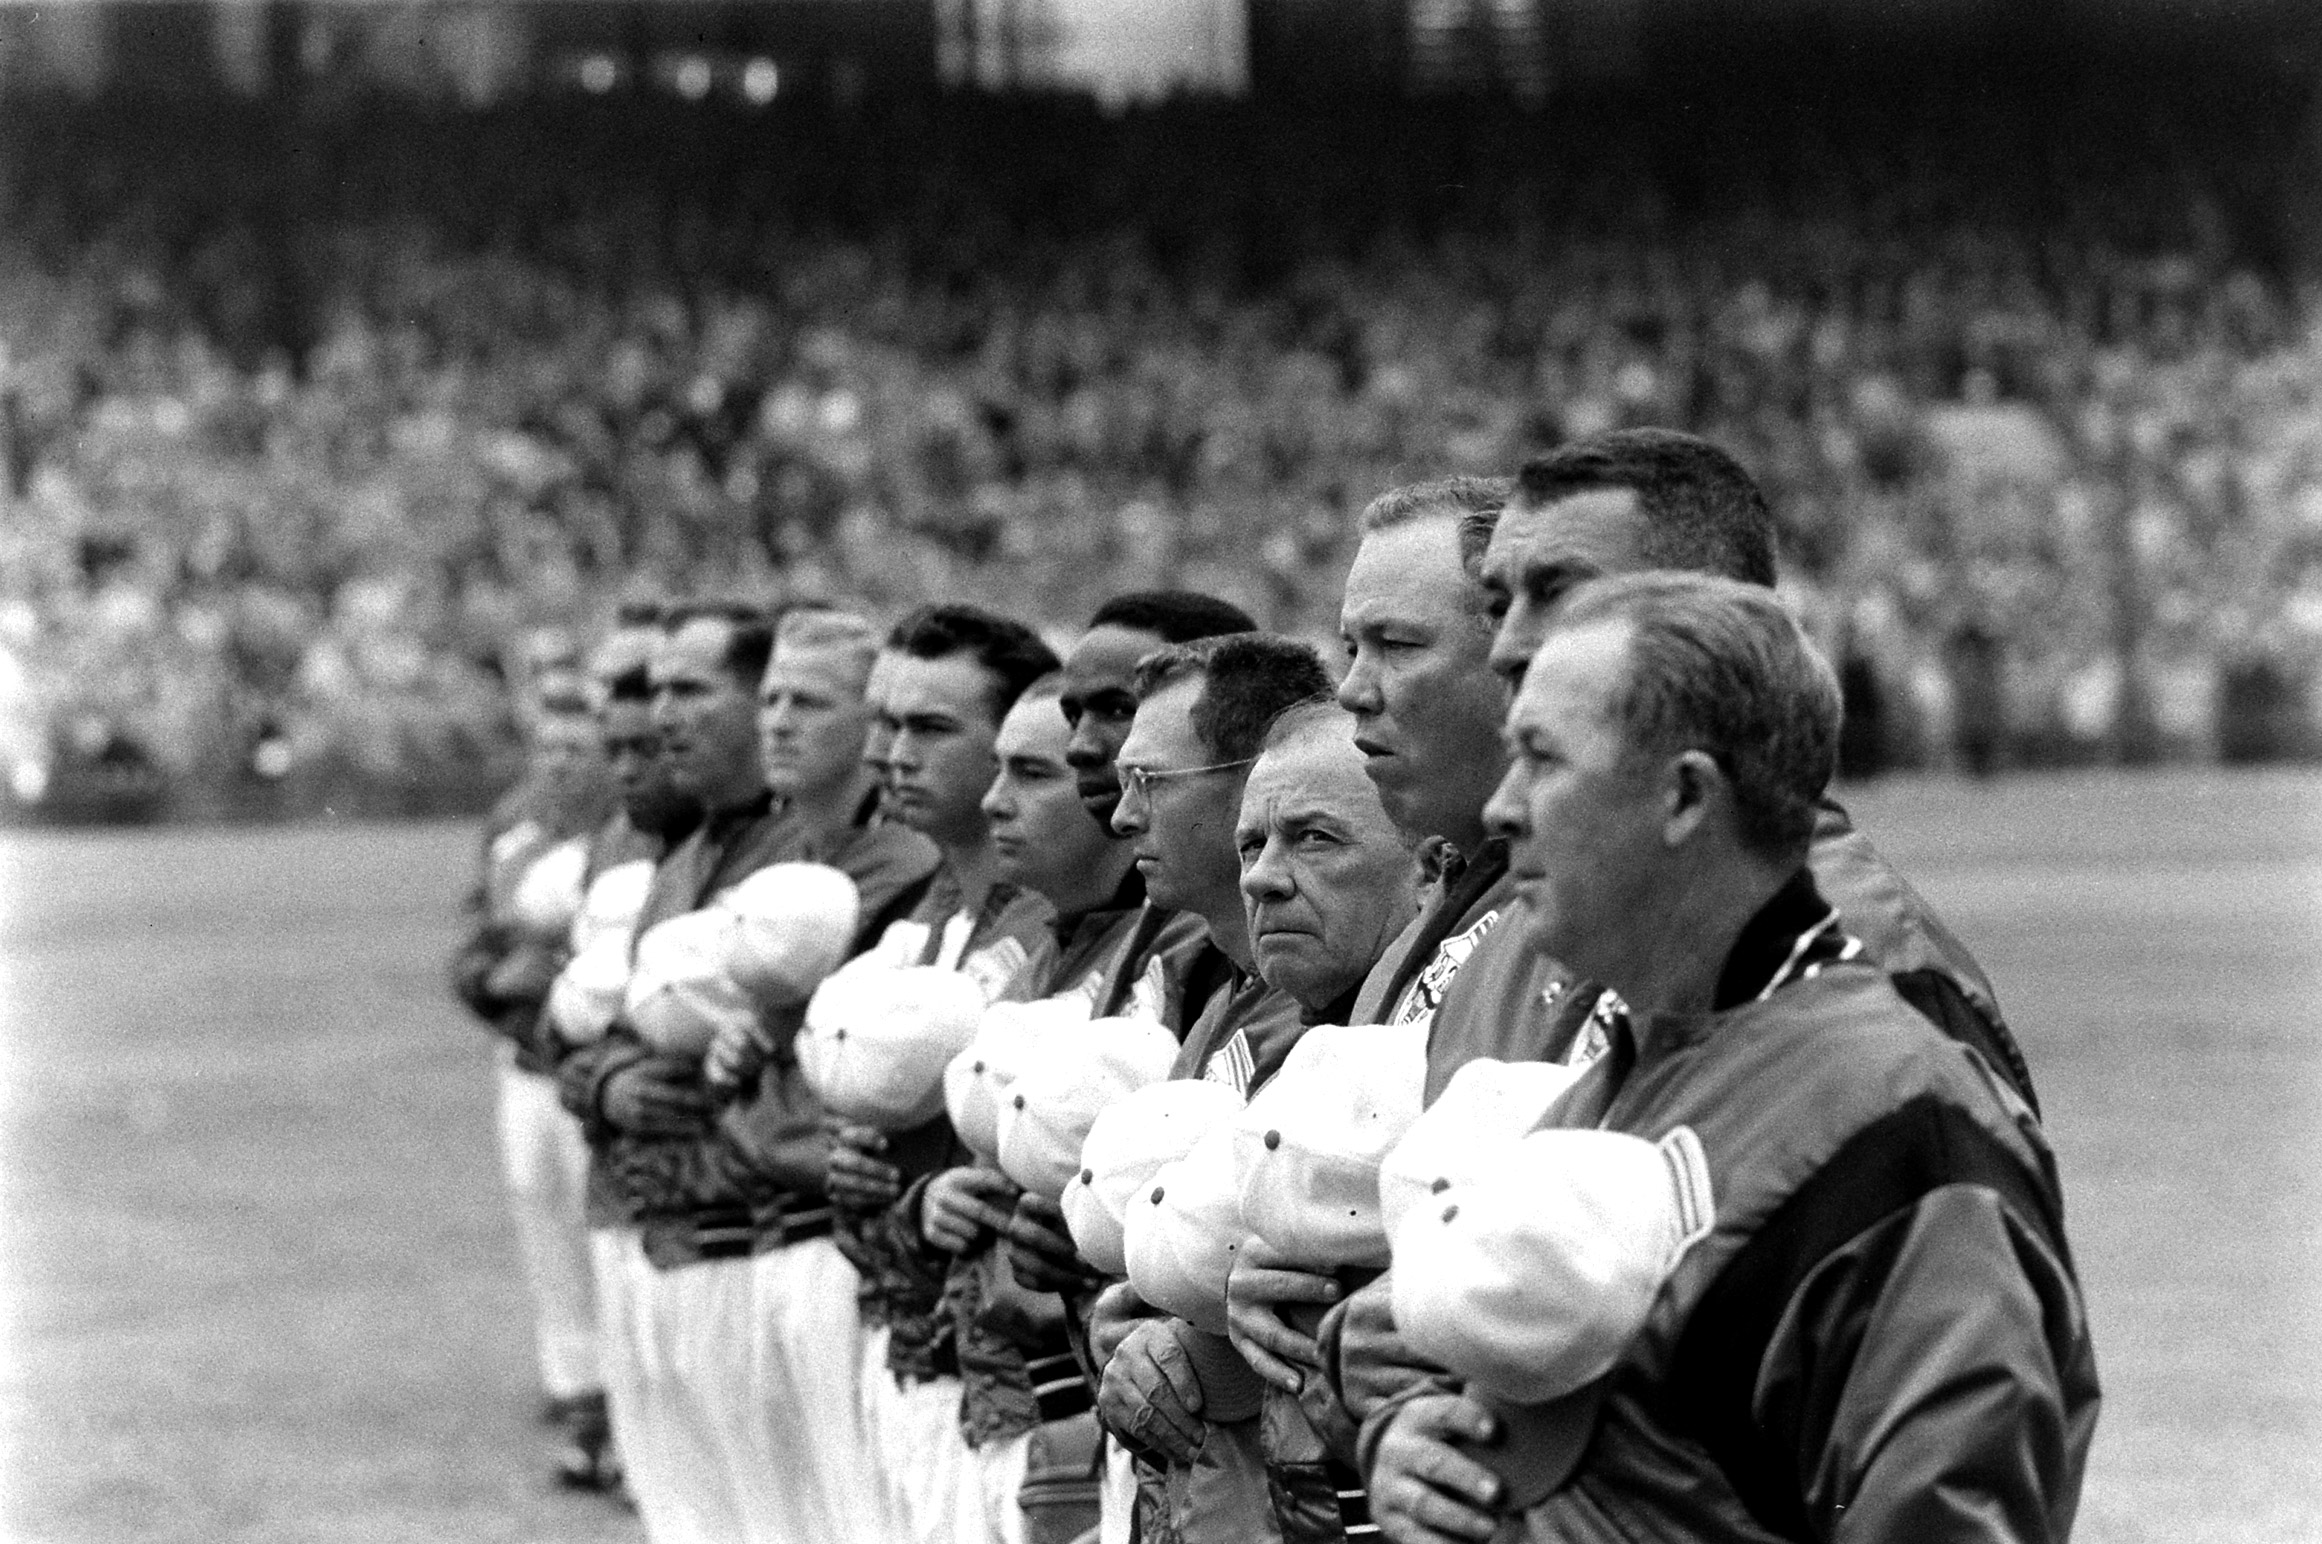 Baseball opening day, Cincinnati, 1957.